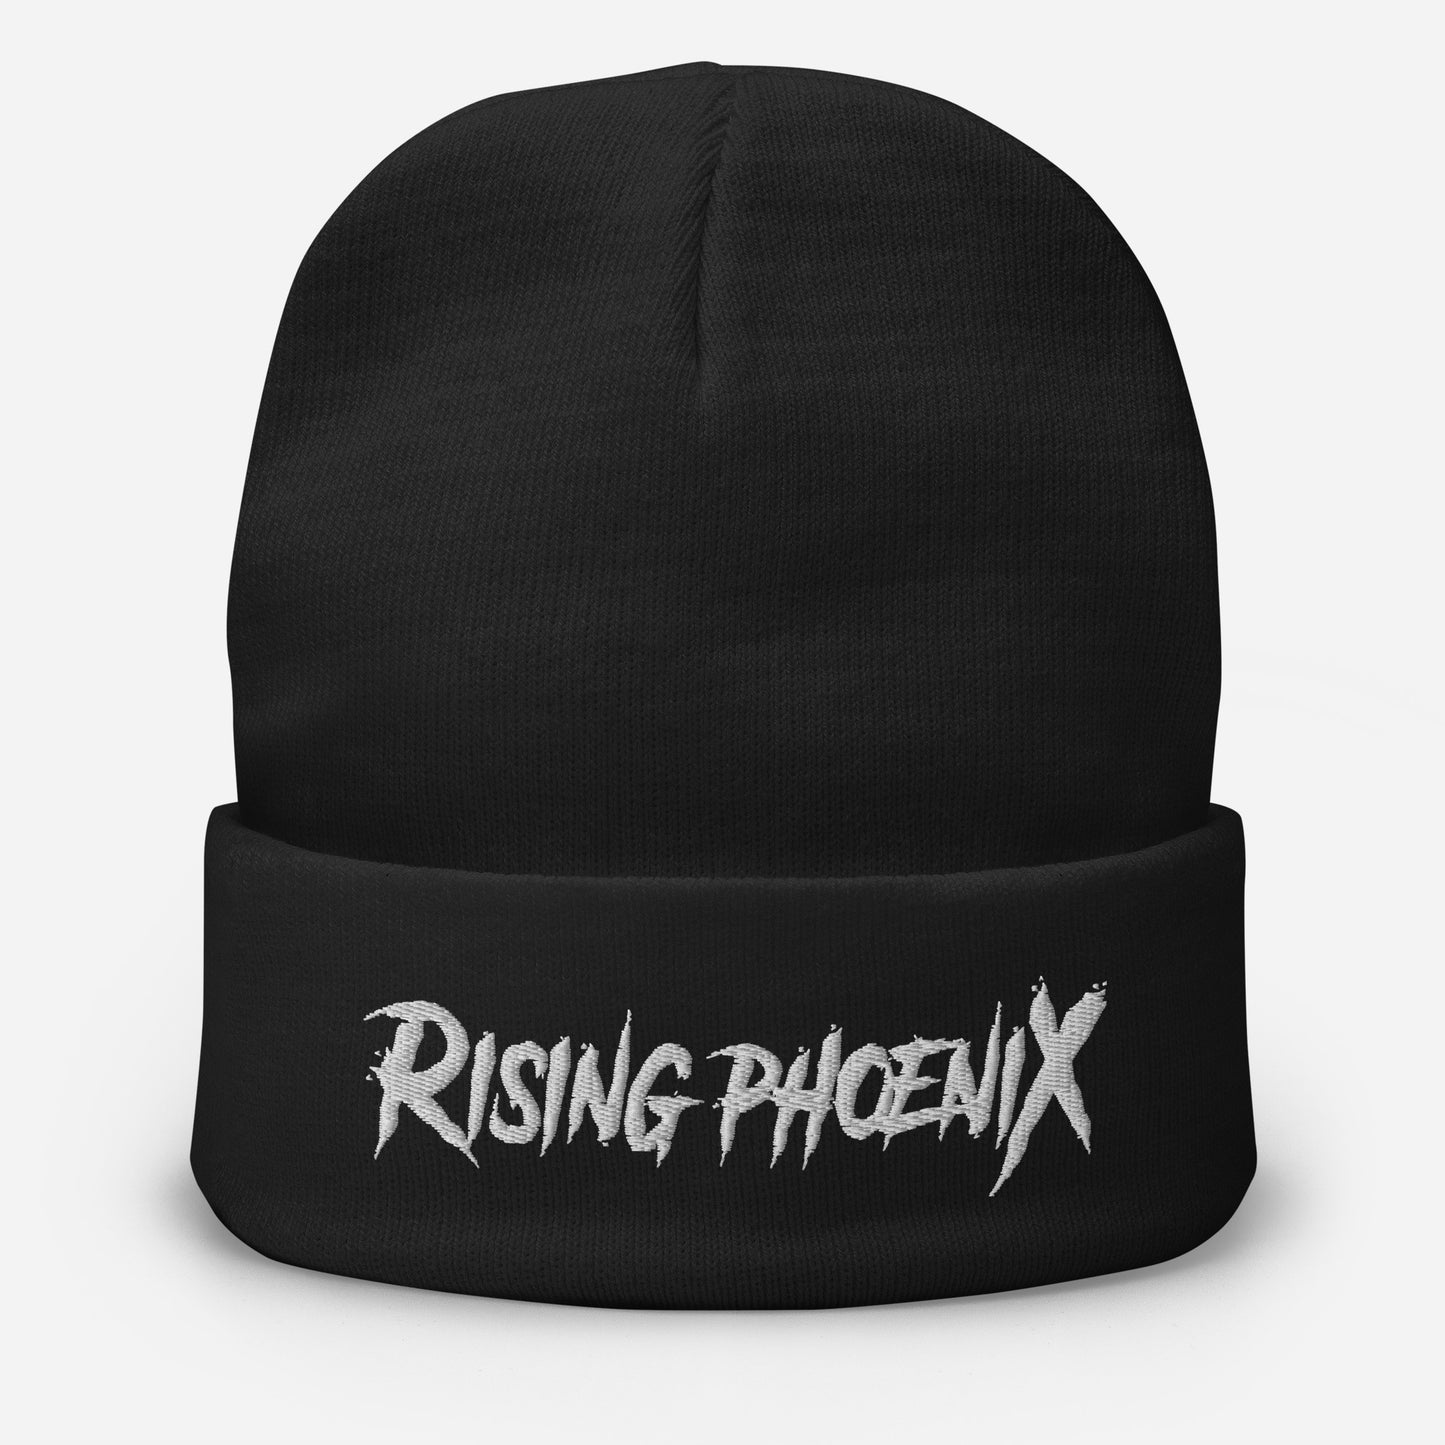 Rising Phoenix Embroidered Beanie